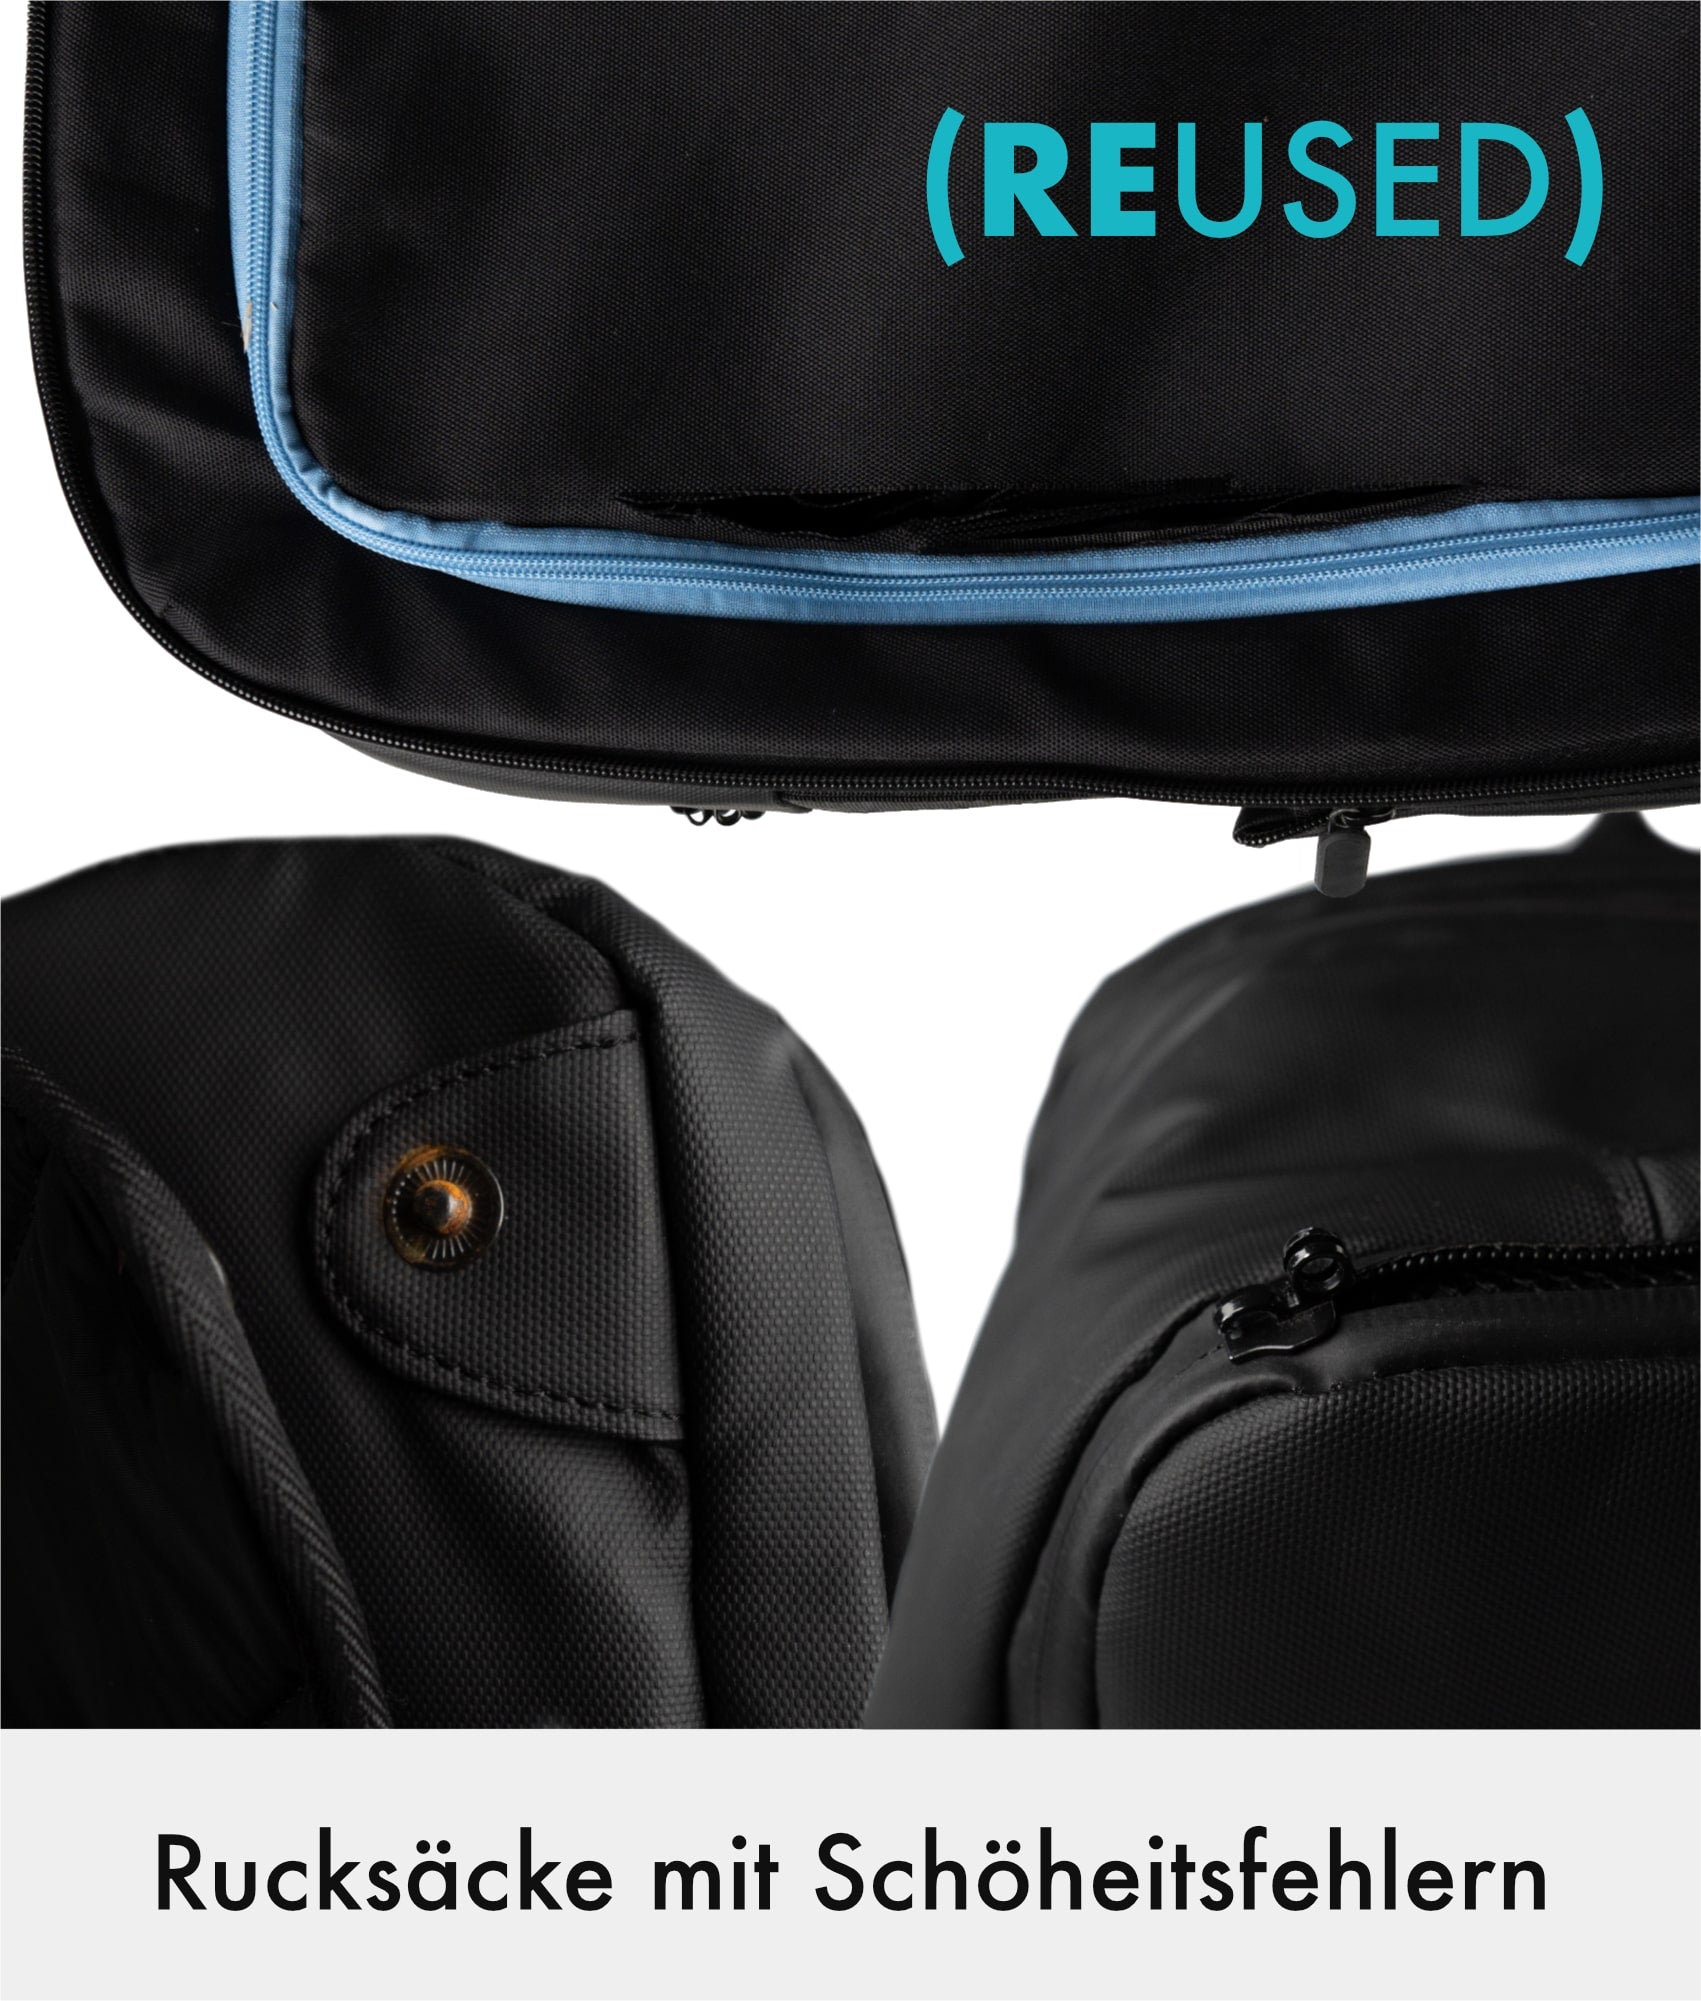 Backpack Mini (REUSED)